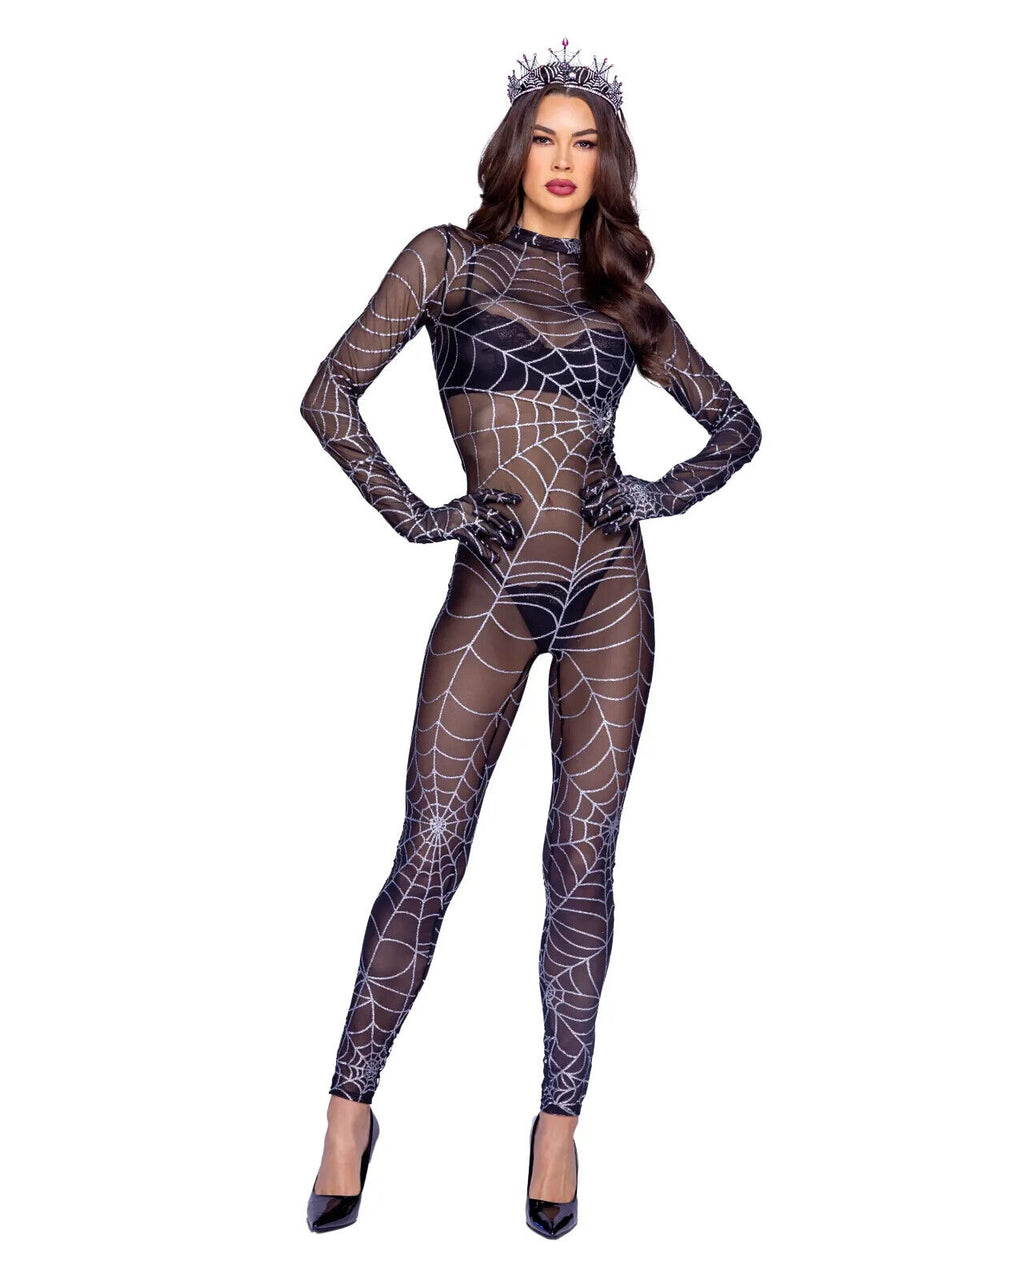 Roma Sparkling Webbed Vixen Sheer Jumpsuit Costume 6375